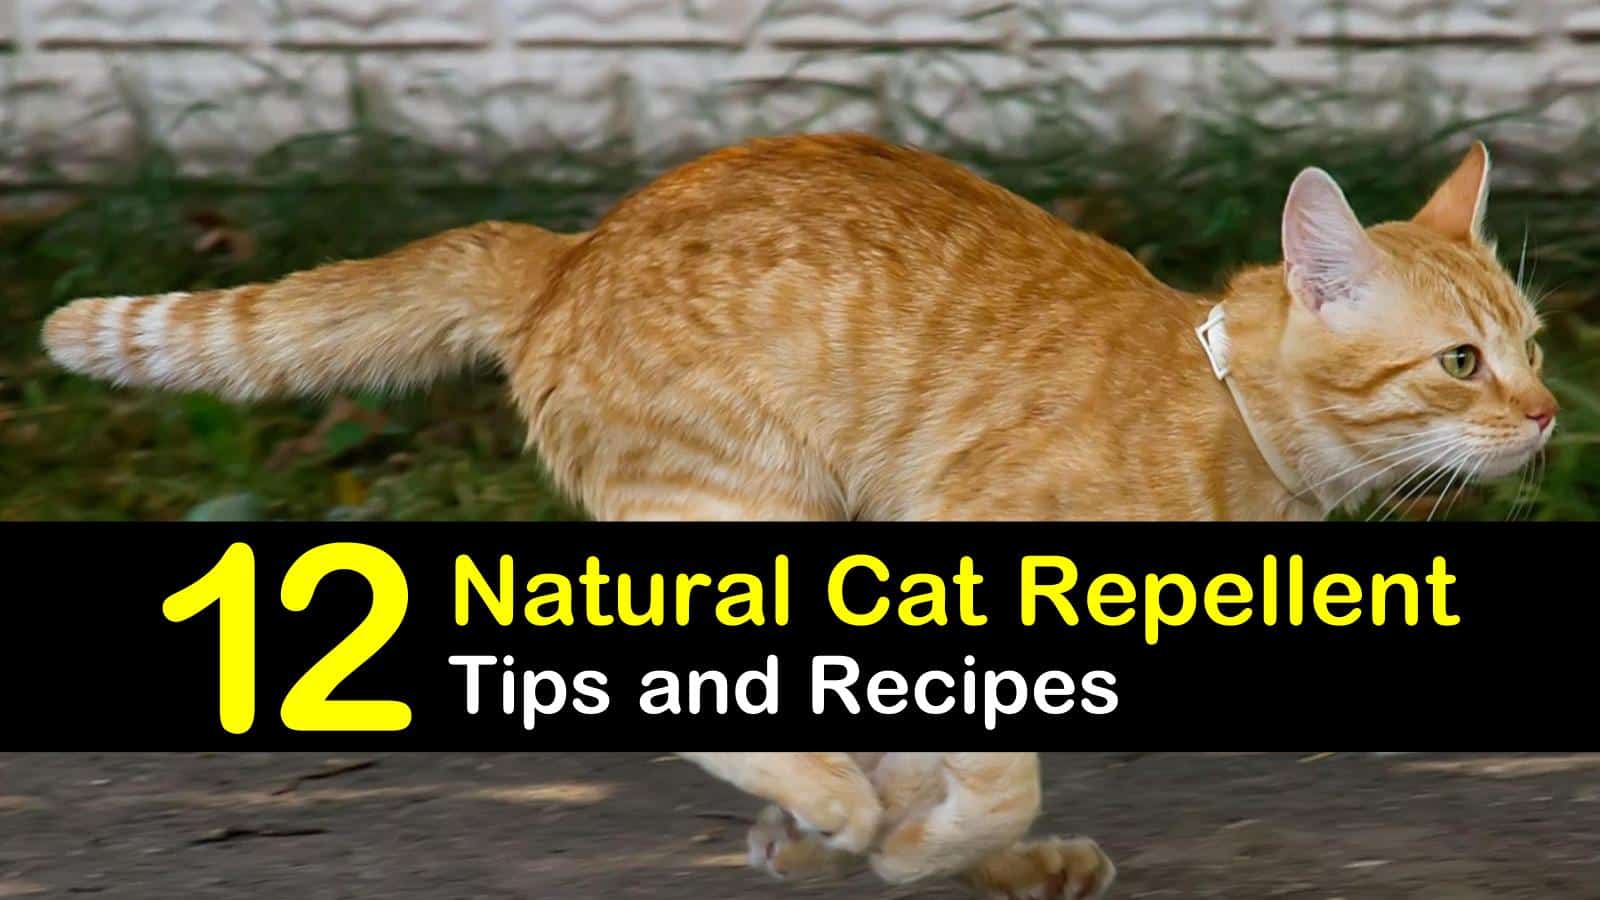 Keeping Cats Away 12 Natural Cat Repellent Tips And Recipes